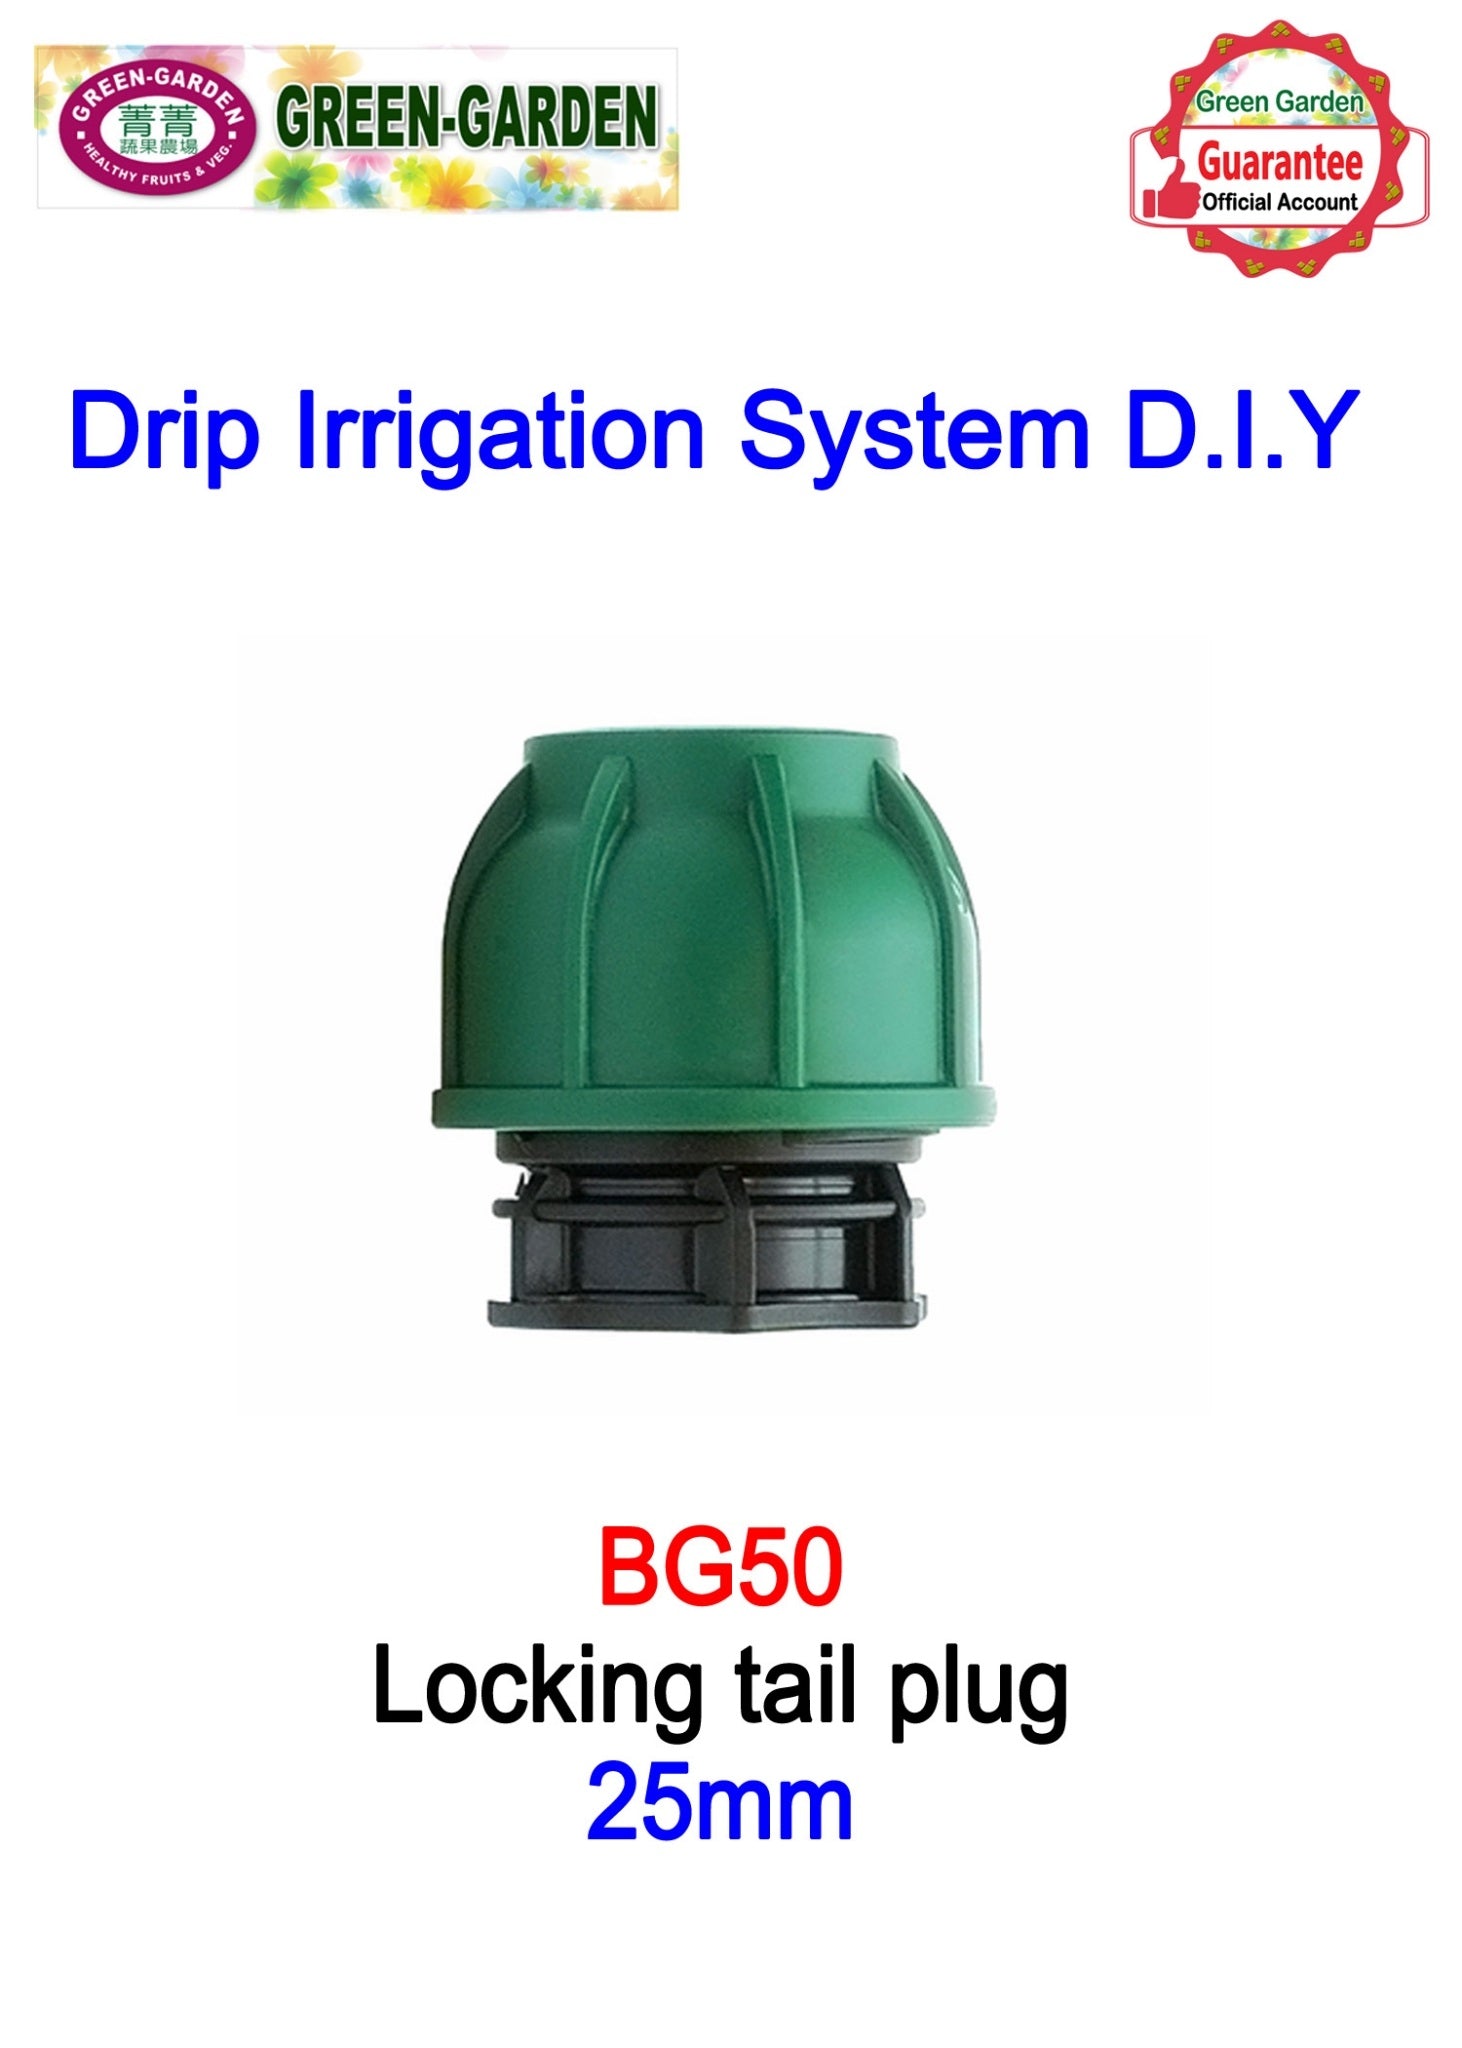 Drip Irrigation System - 25mm locking tail plug BG50